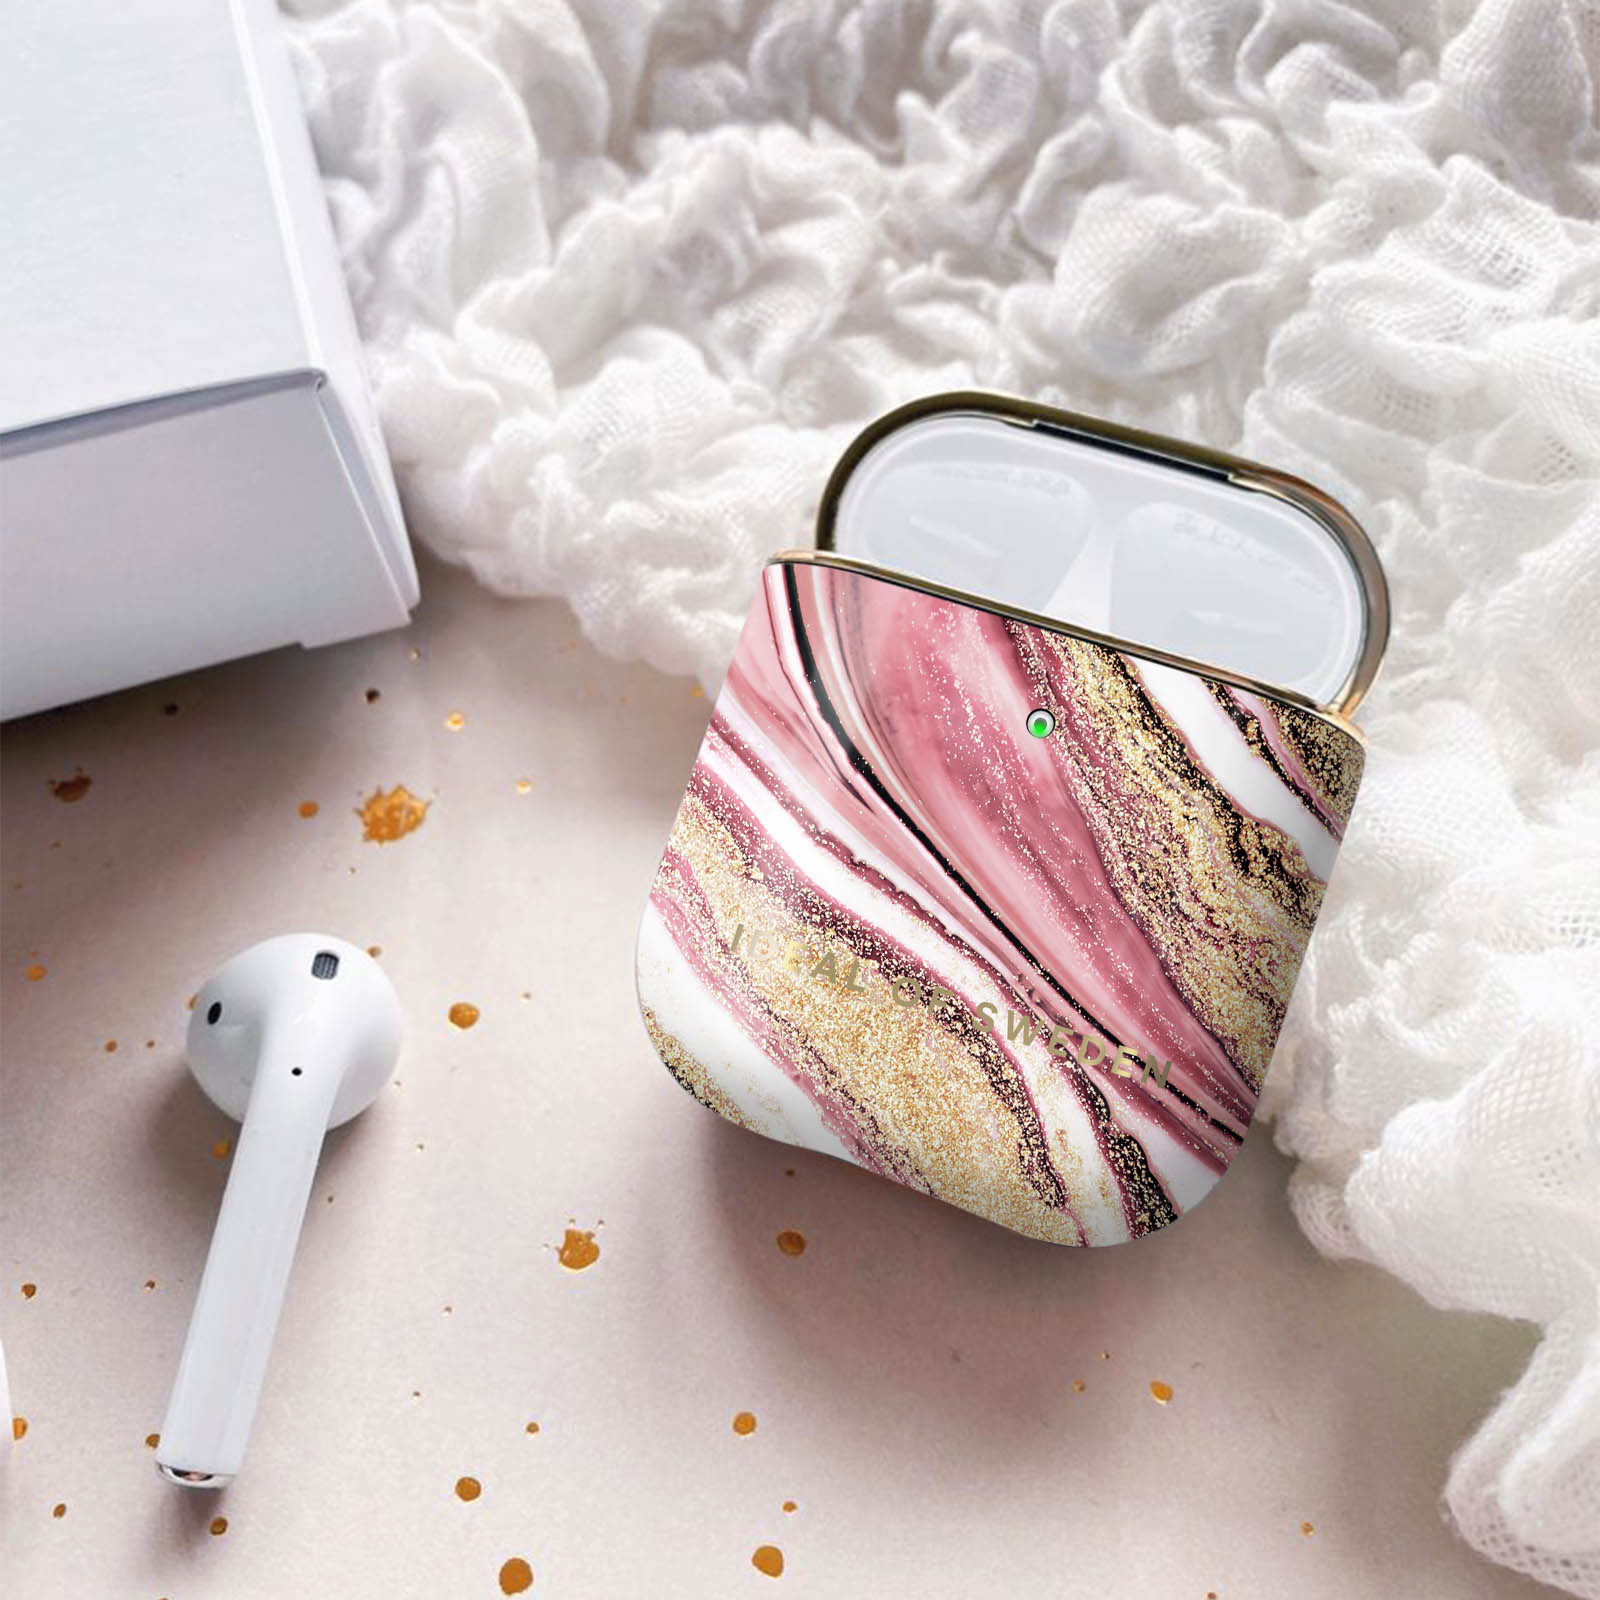 IDEAL OF SWEDEN IDFAPC-193 für: passend Pink Full Swirl Cover Case AirPod Apple Cosmic